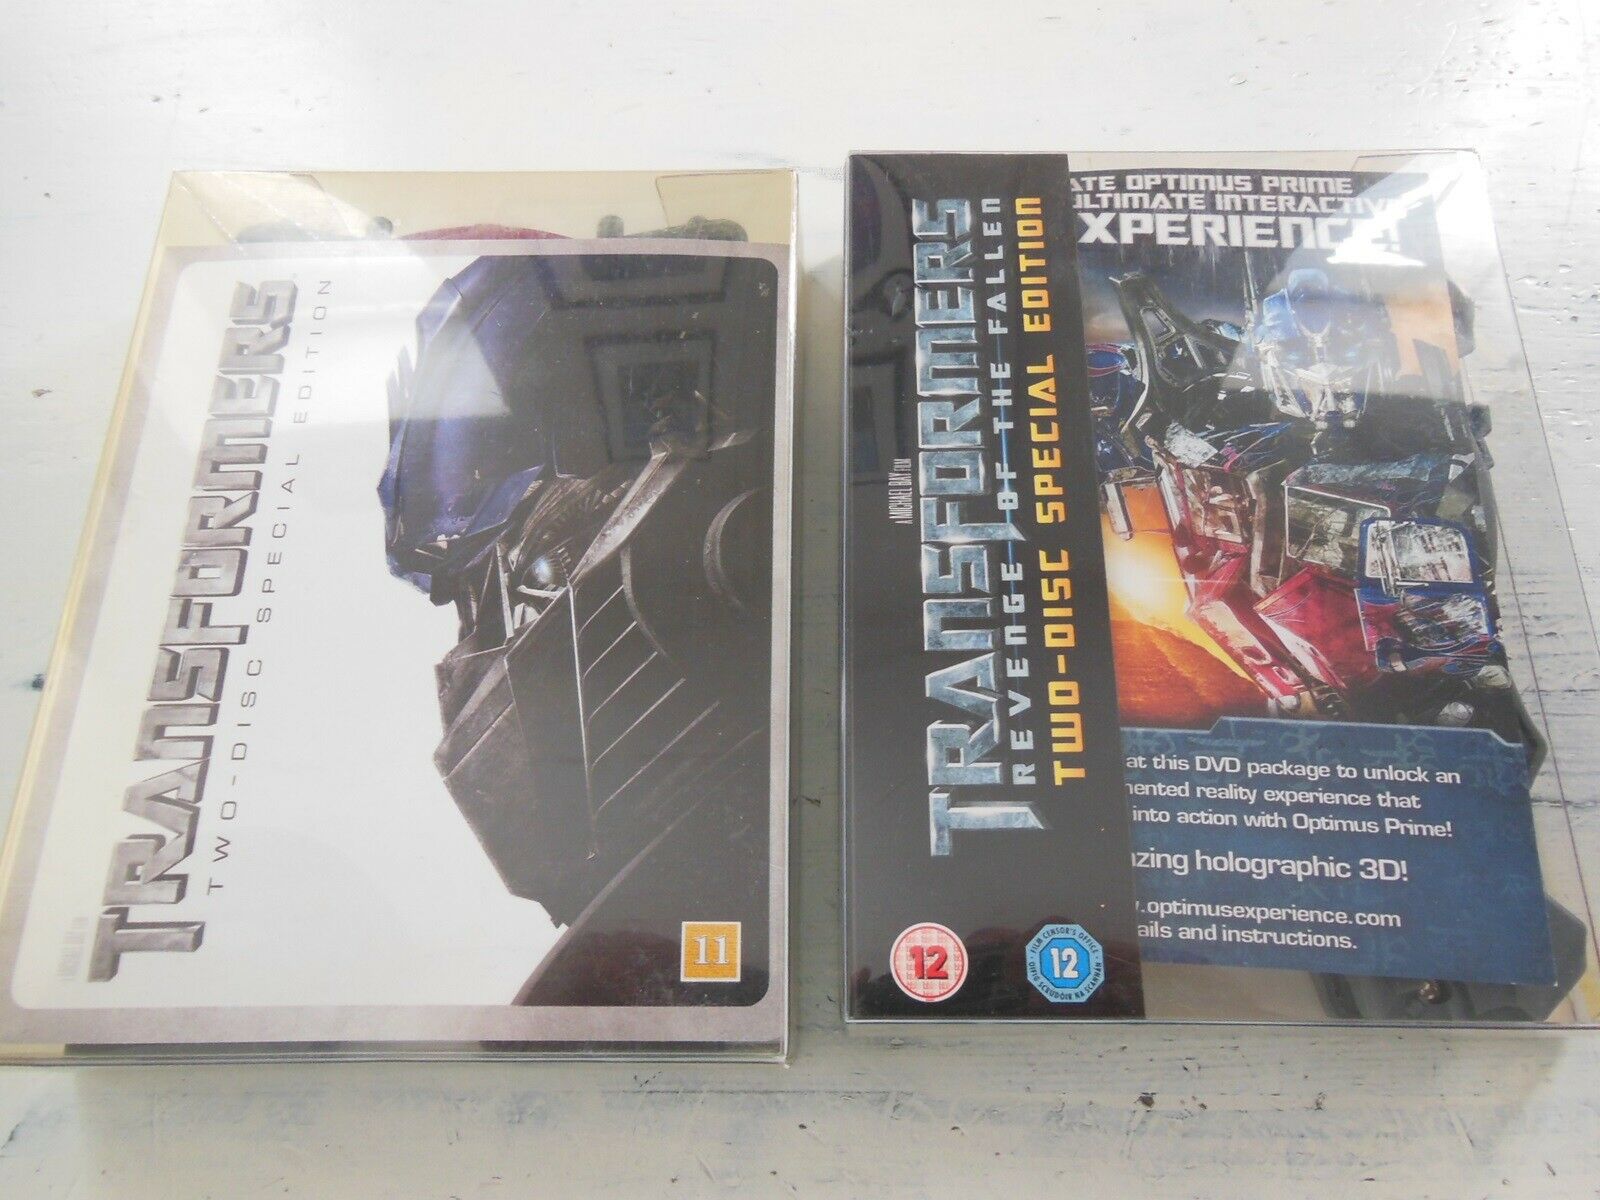 Transformers DVD Boks med Transformer ffigur, DVD,